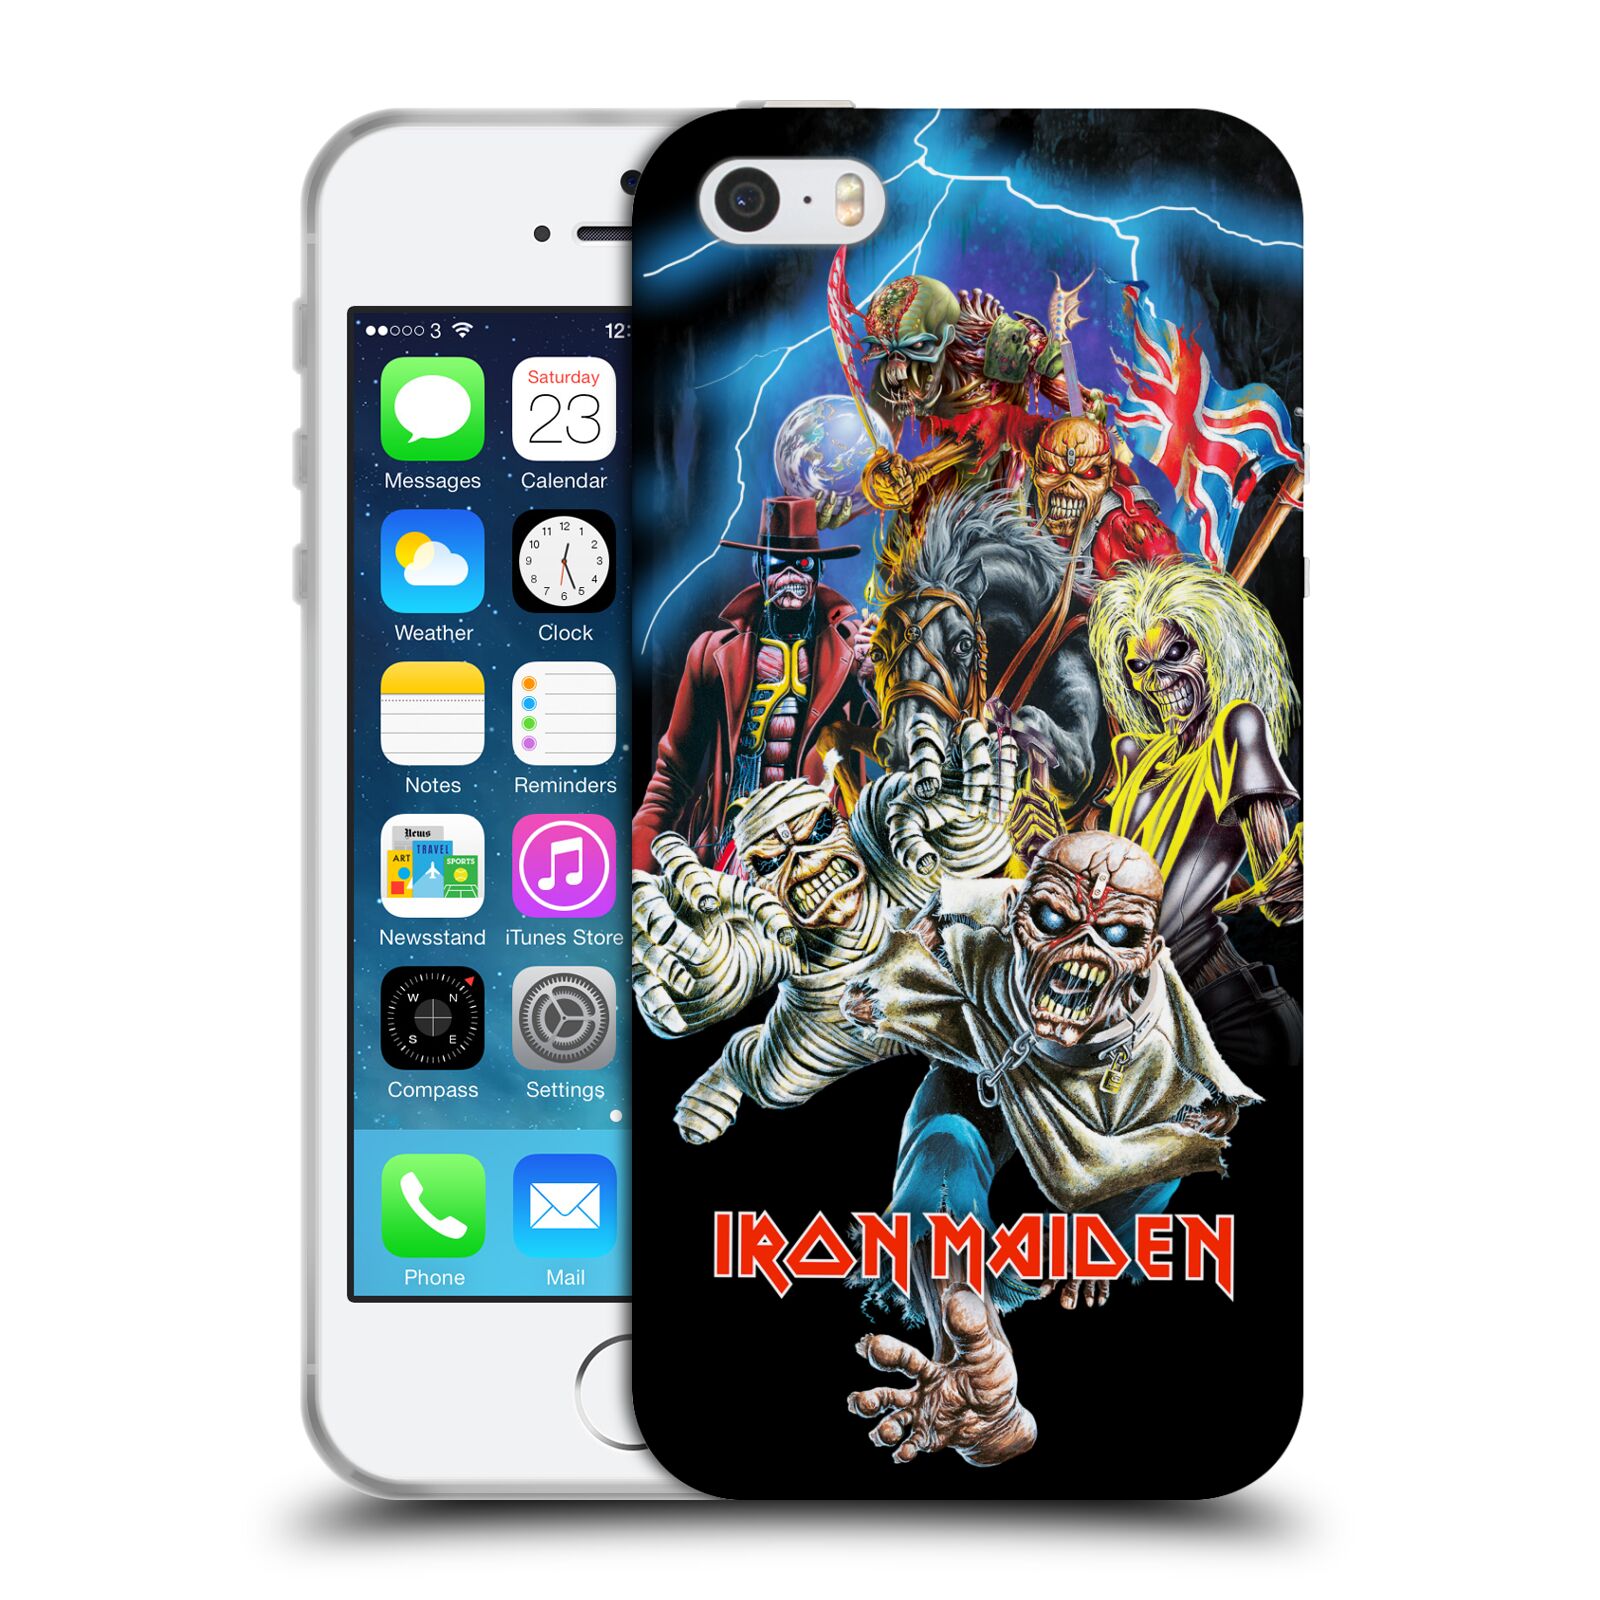 Silikonové pouzdro na mobil Apple iPhone 5, 5S, SE - Head Case - Iron Maiden - Best Of Beast (Silikonový kryt, obal, pouzdro na mobilní telefon Apple iPhone SE, 5S a 5 s motivem Iron Maiden - Best Of Beast)